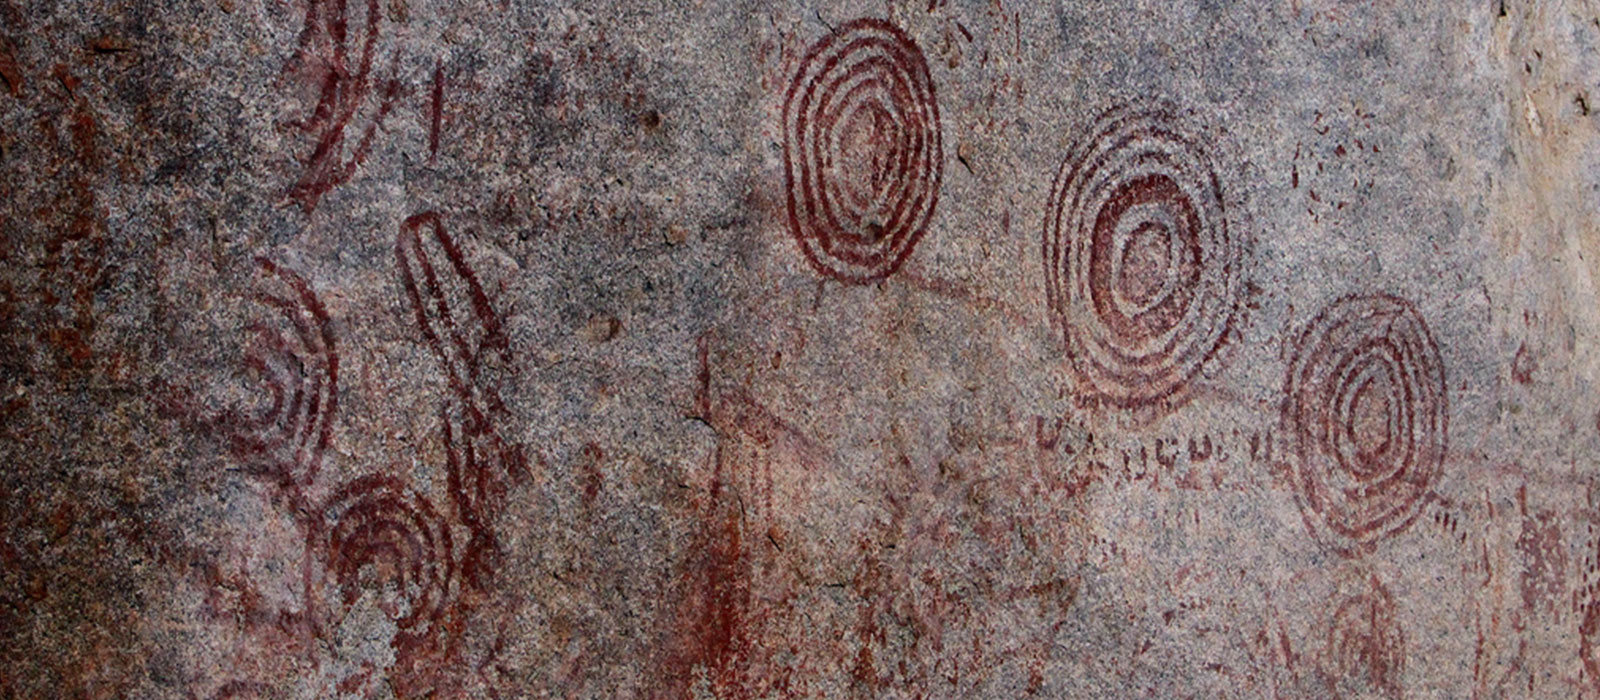 Nyero rock paintings 